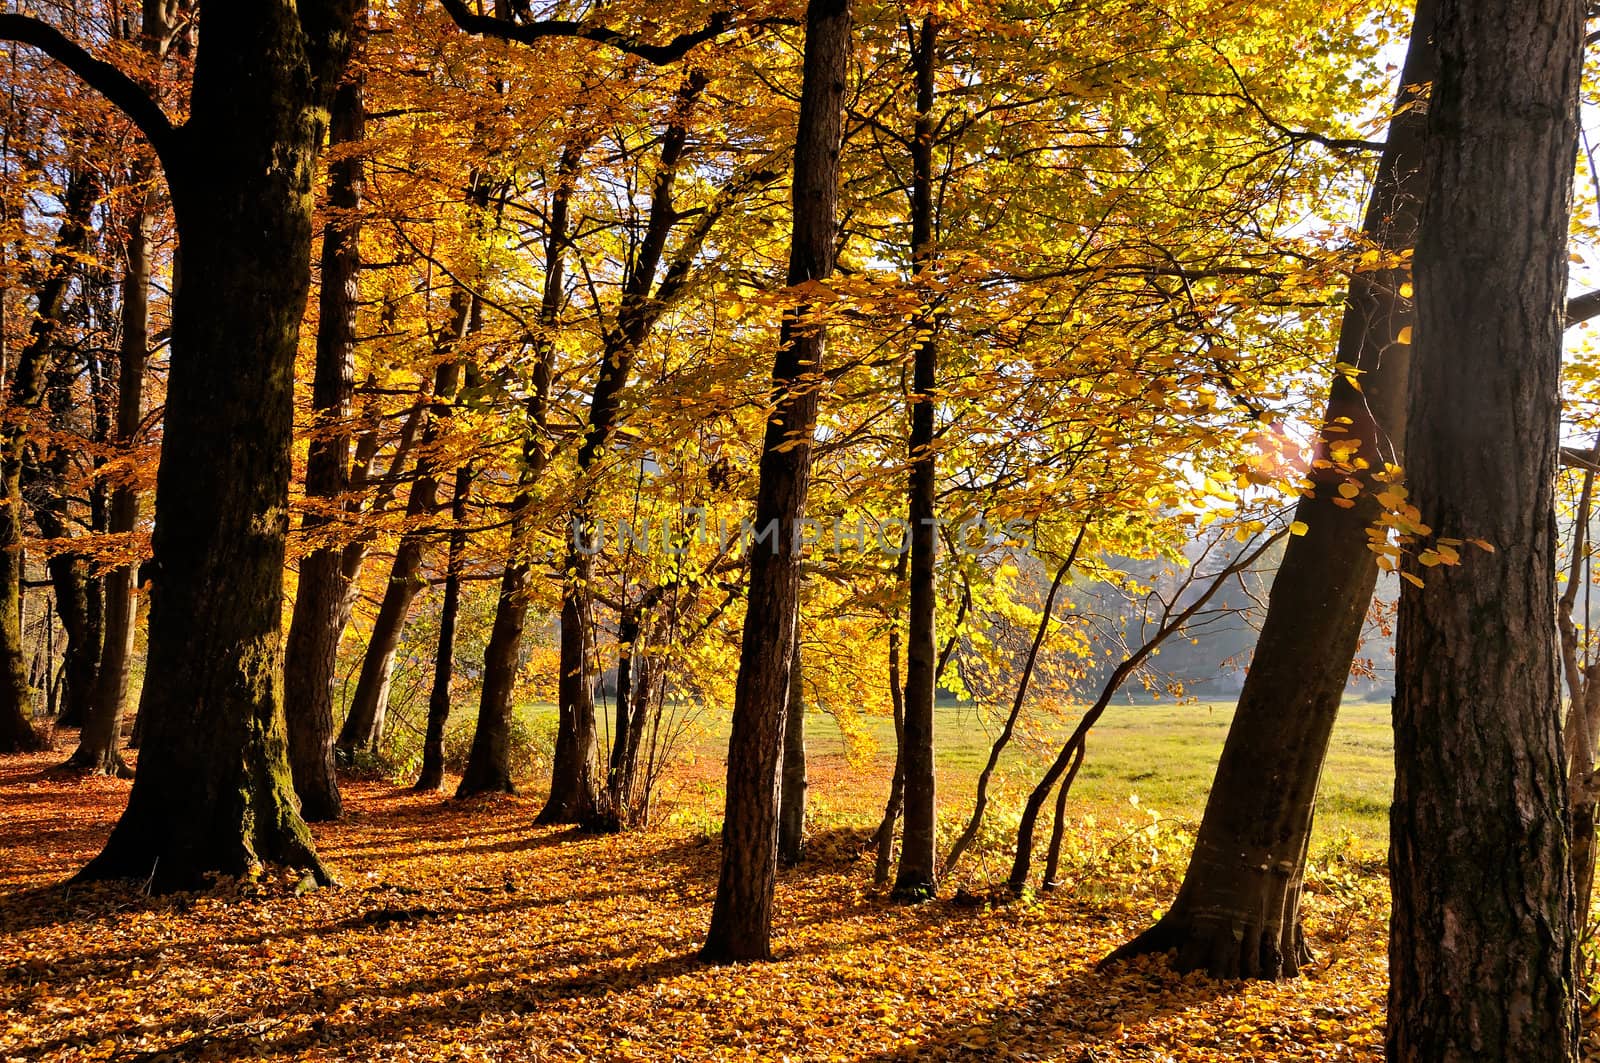 Beautibul scene in autumn forest